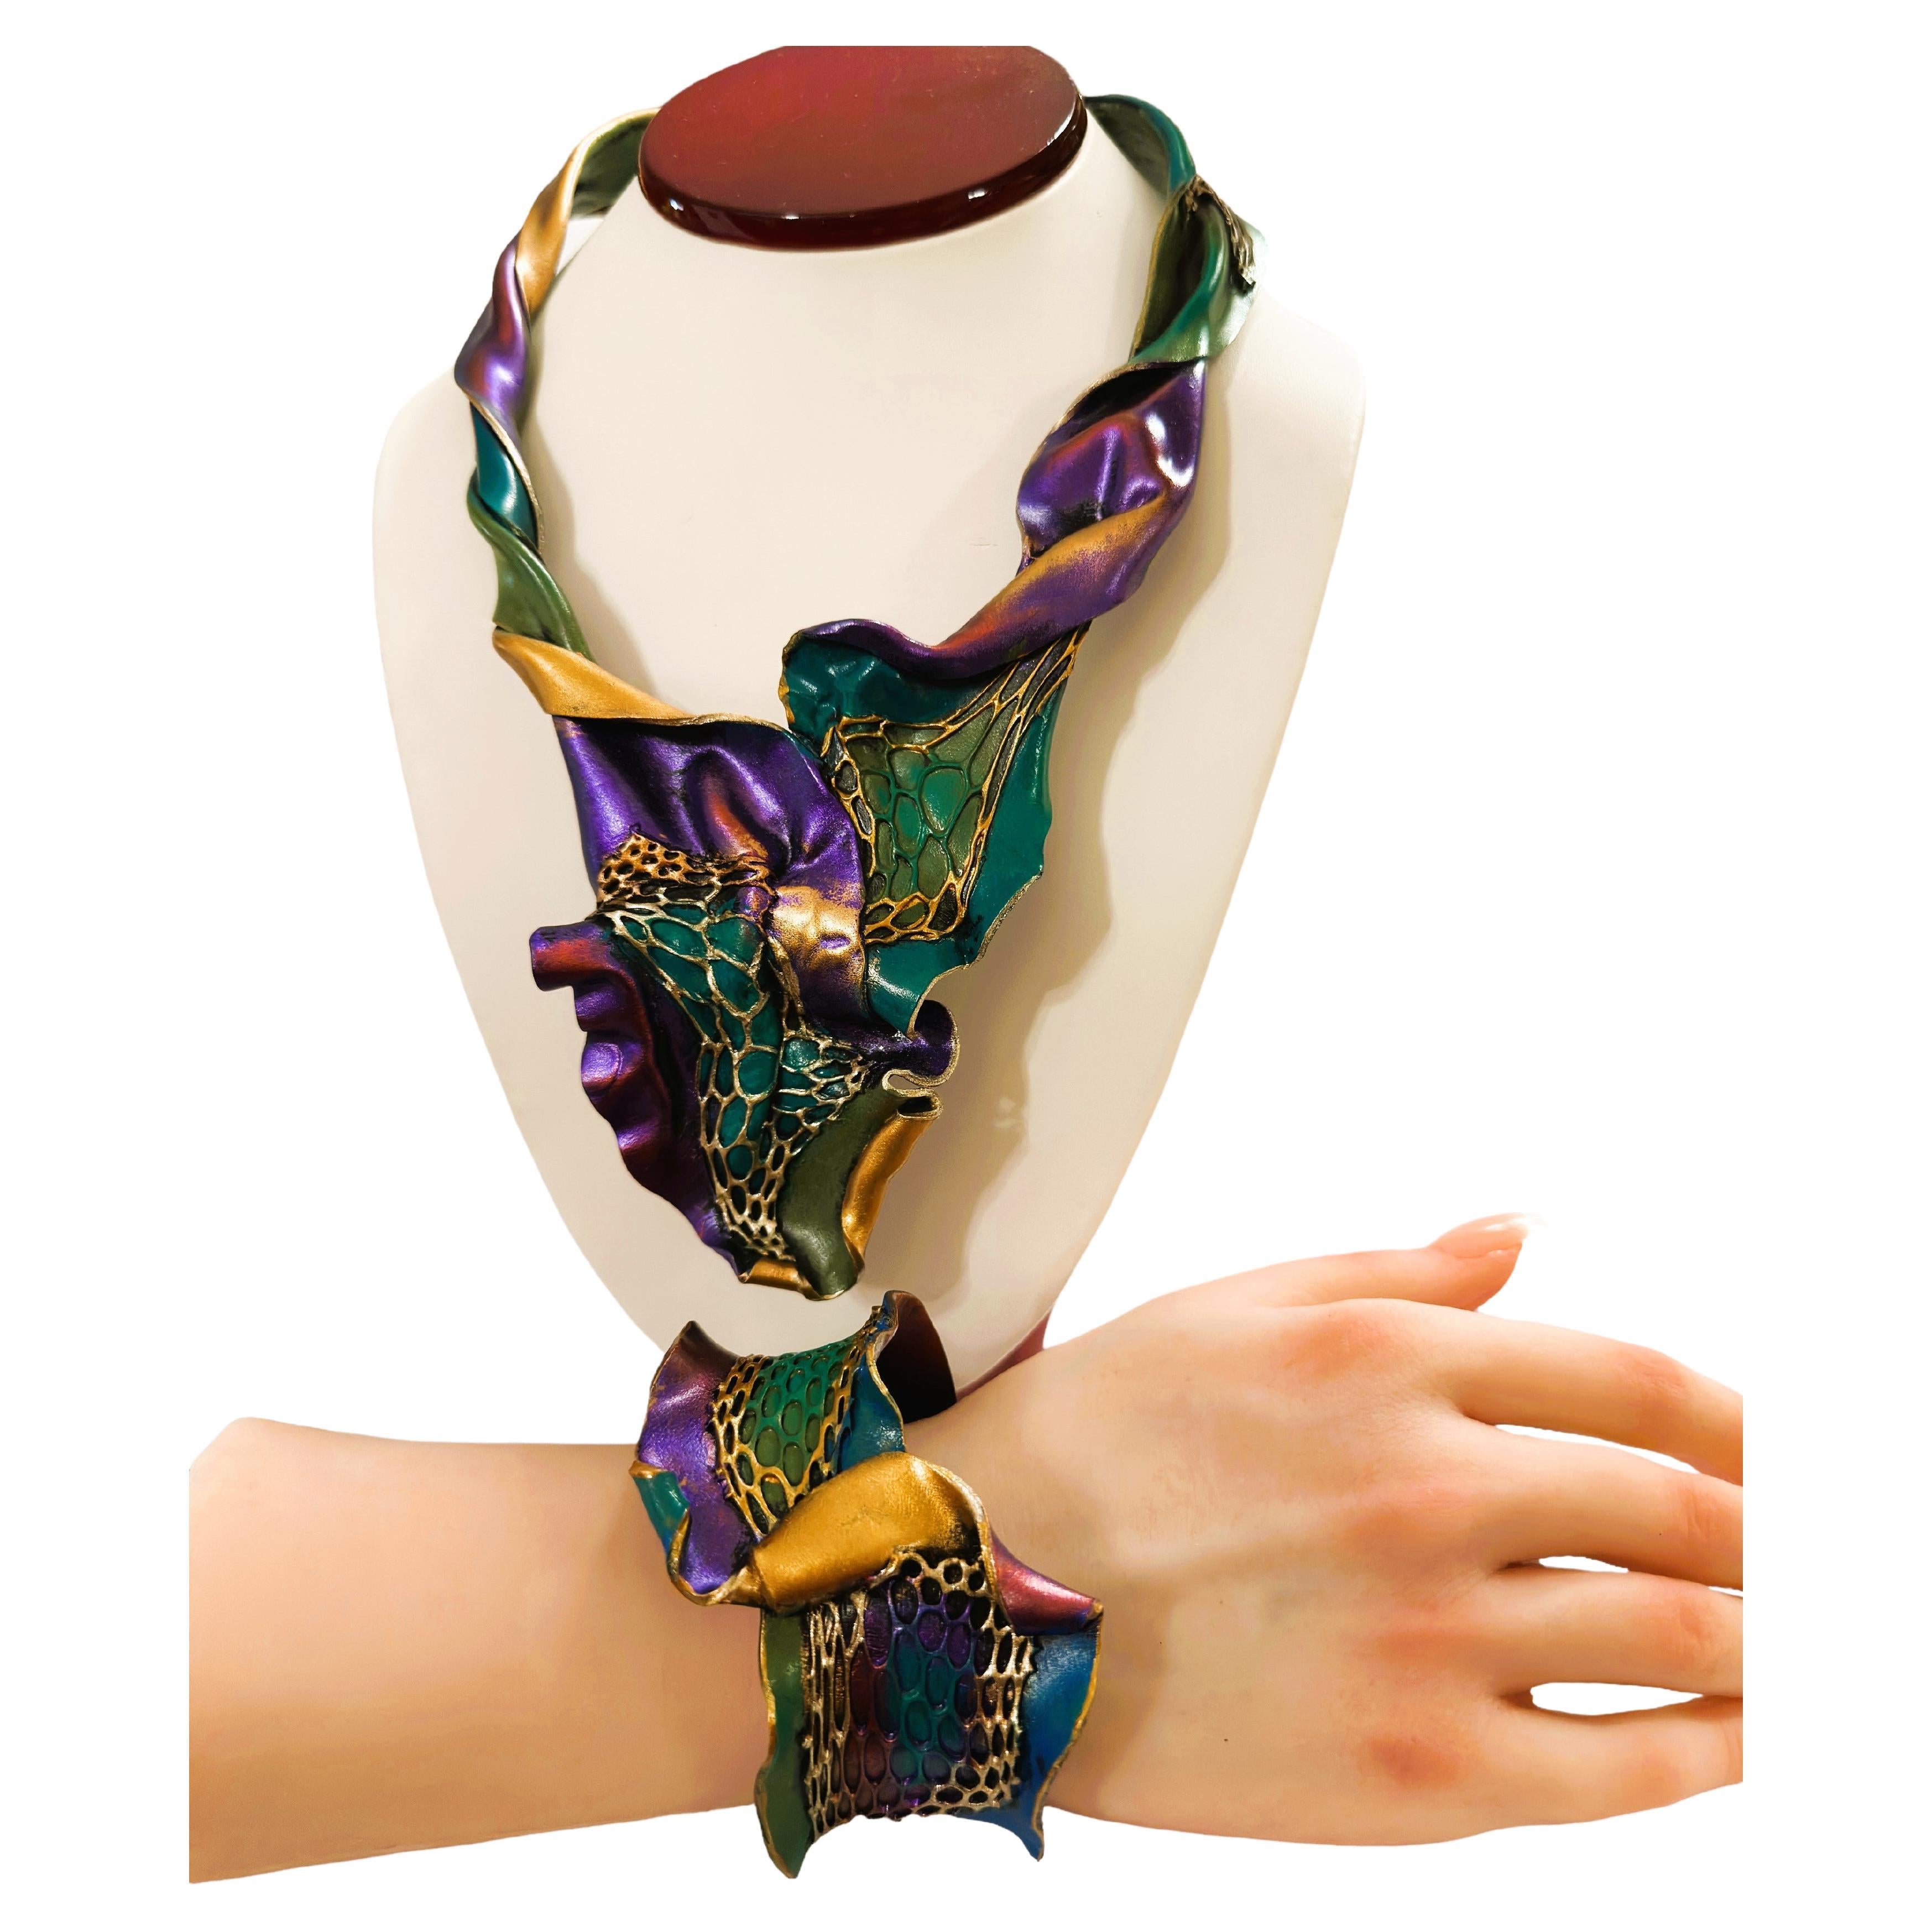 Jeanique Hand Sculpted, Hand Painted Wearable Art - Necklace & Bracelet For Sale